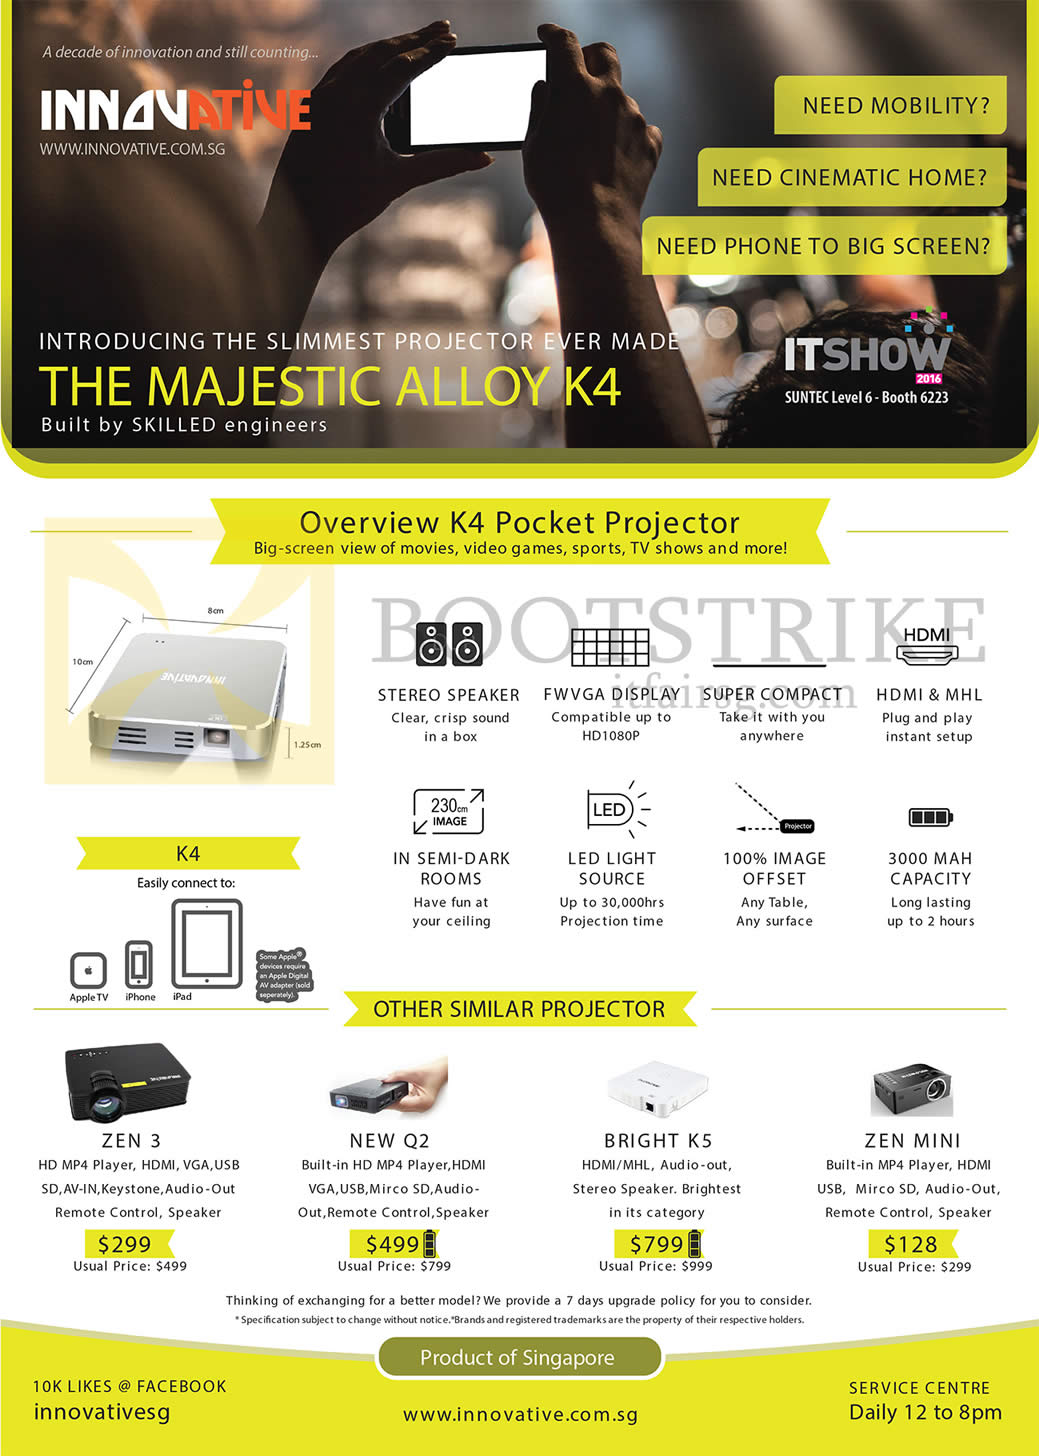 IT SHOW 2016 price list image brochure of Innovative Pocket Projectors Zen 3, Q2, Bright K5, Zen Mini